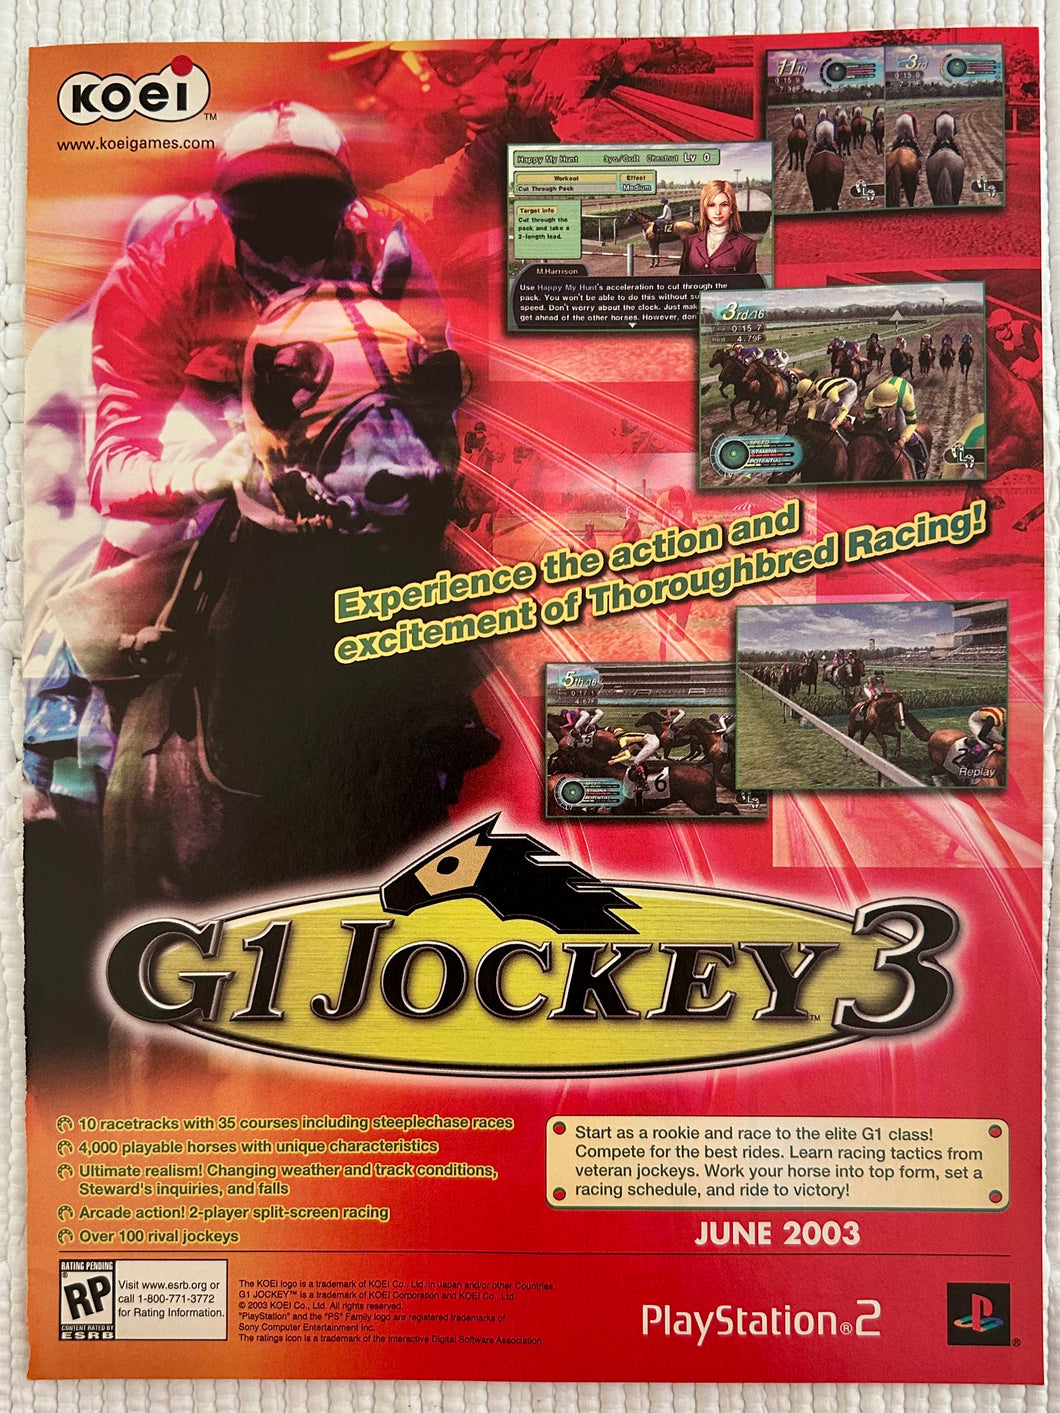 G1 Jockey 3 - PS2 - Original Vintage Advertisement - Print Ads - Laminated A4 Poster